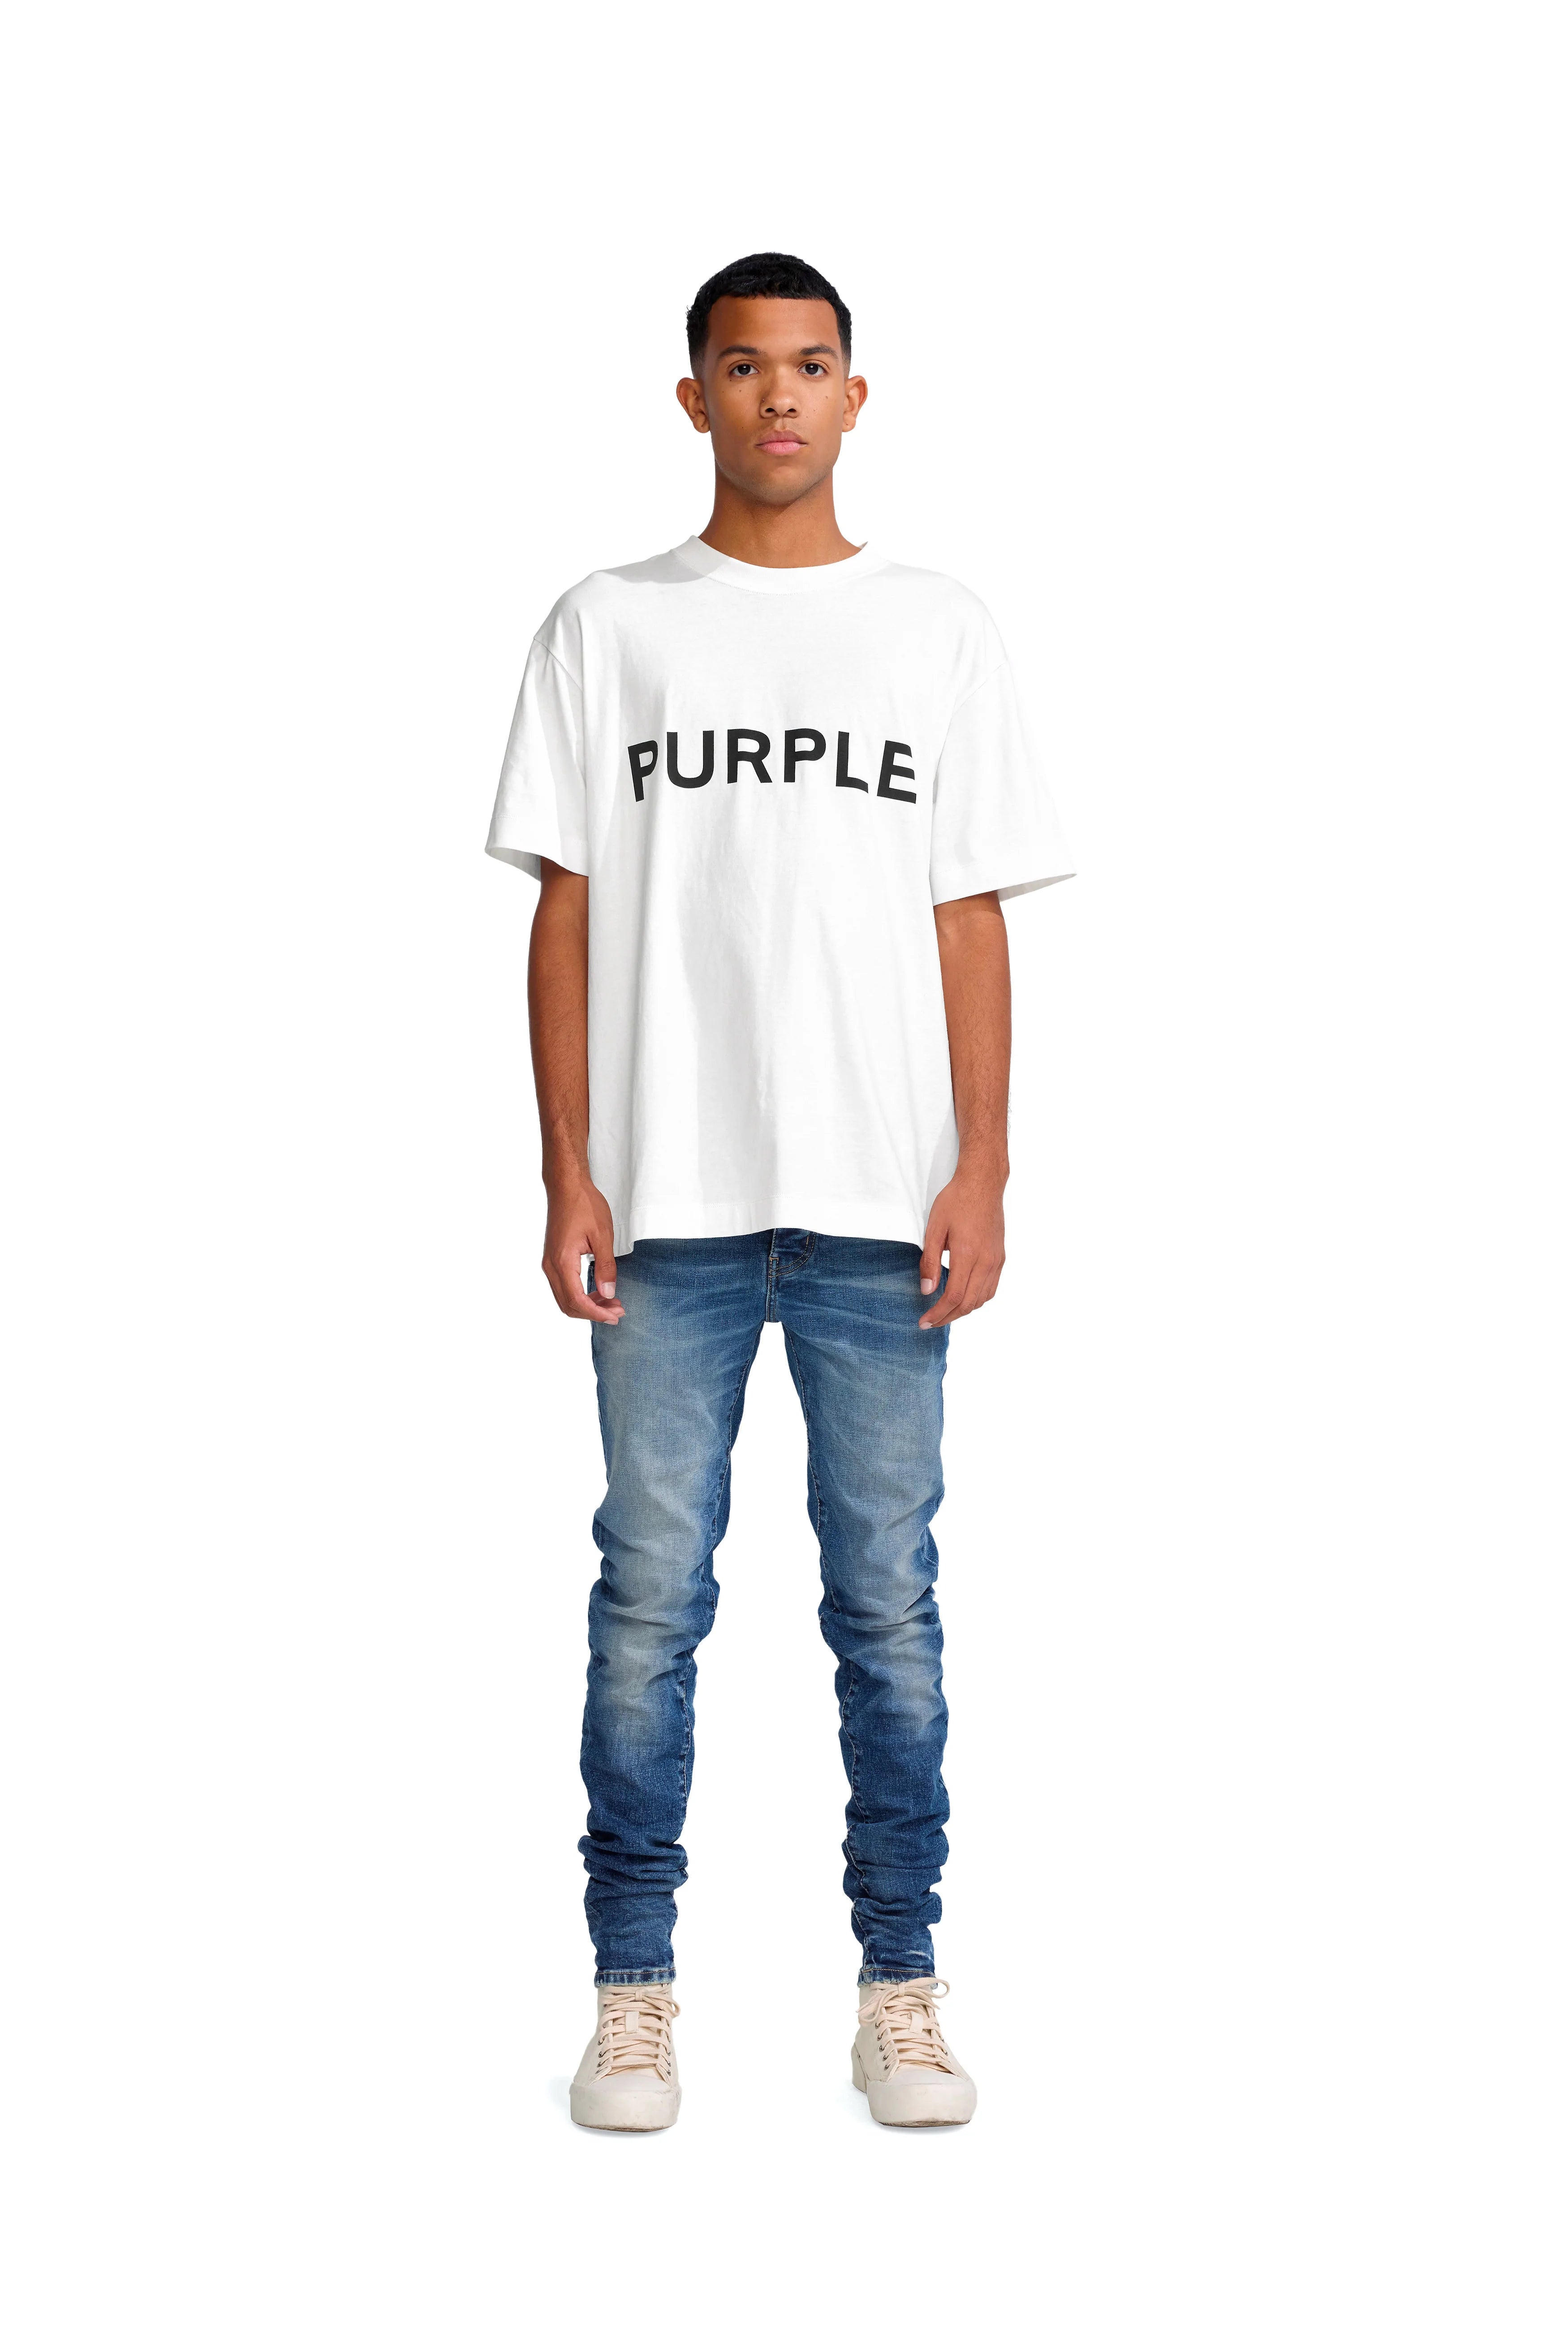 PURPLE REGULAR FIT-Shirt